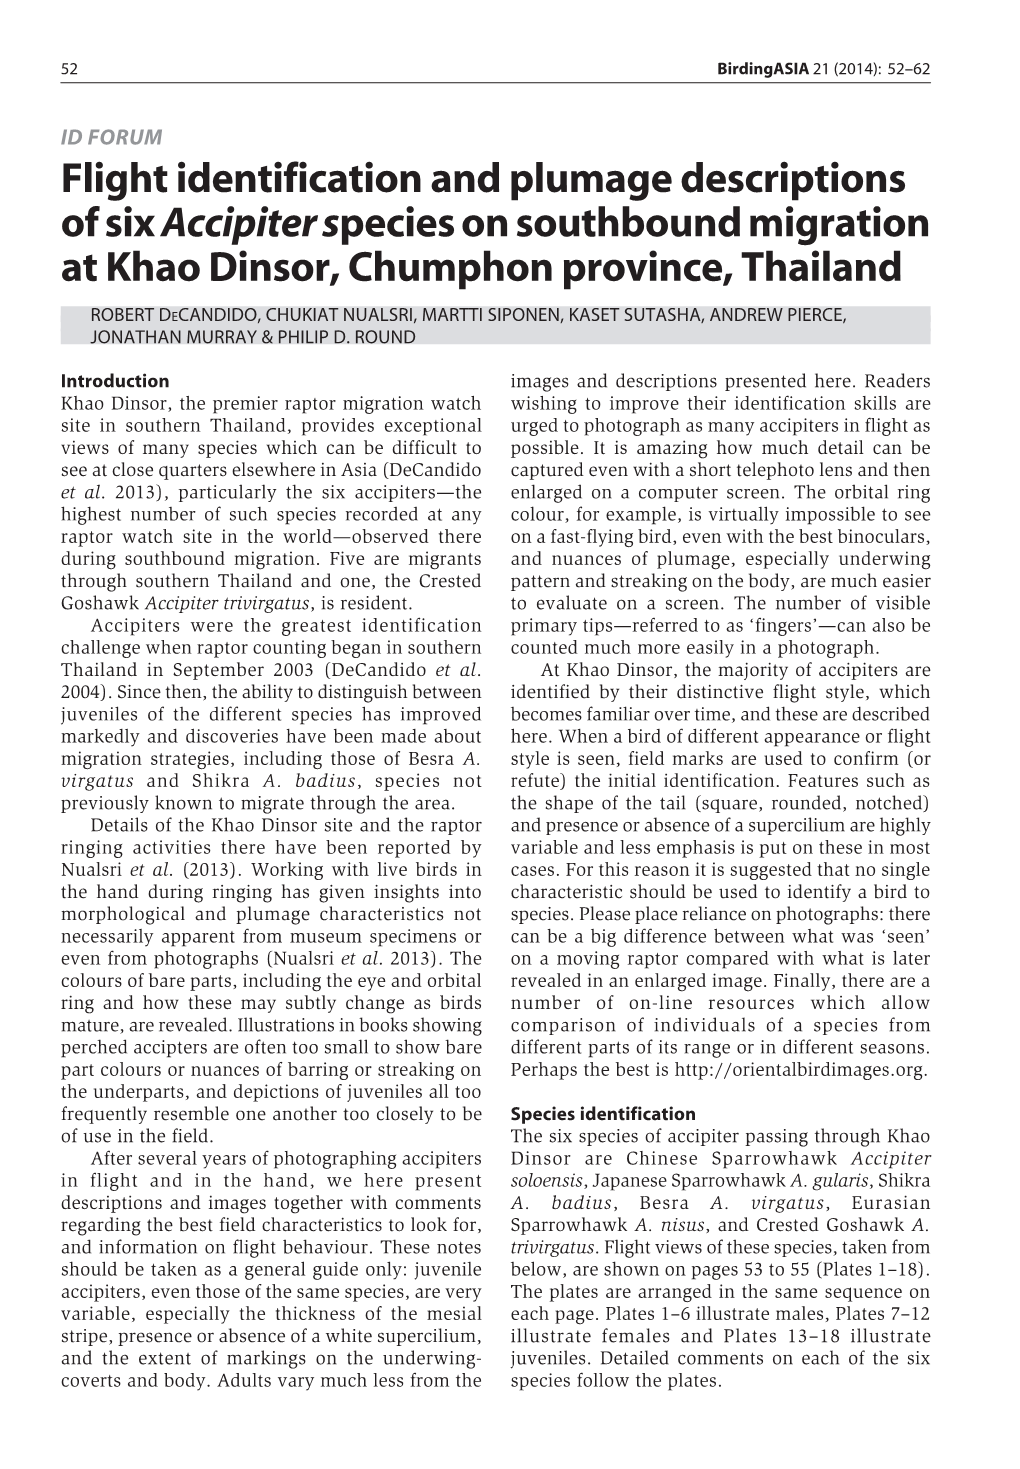 Flight Identification of Accipiters in Thailand